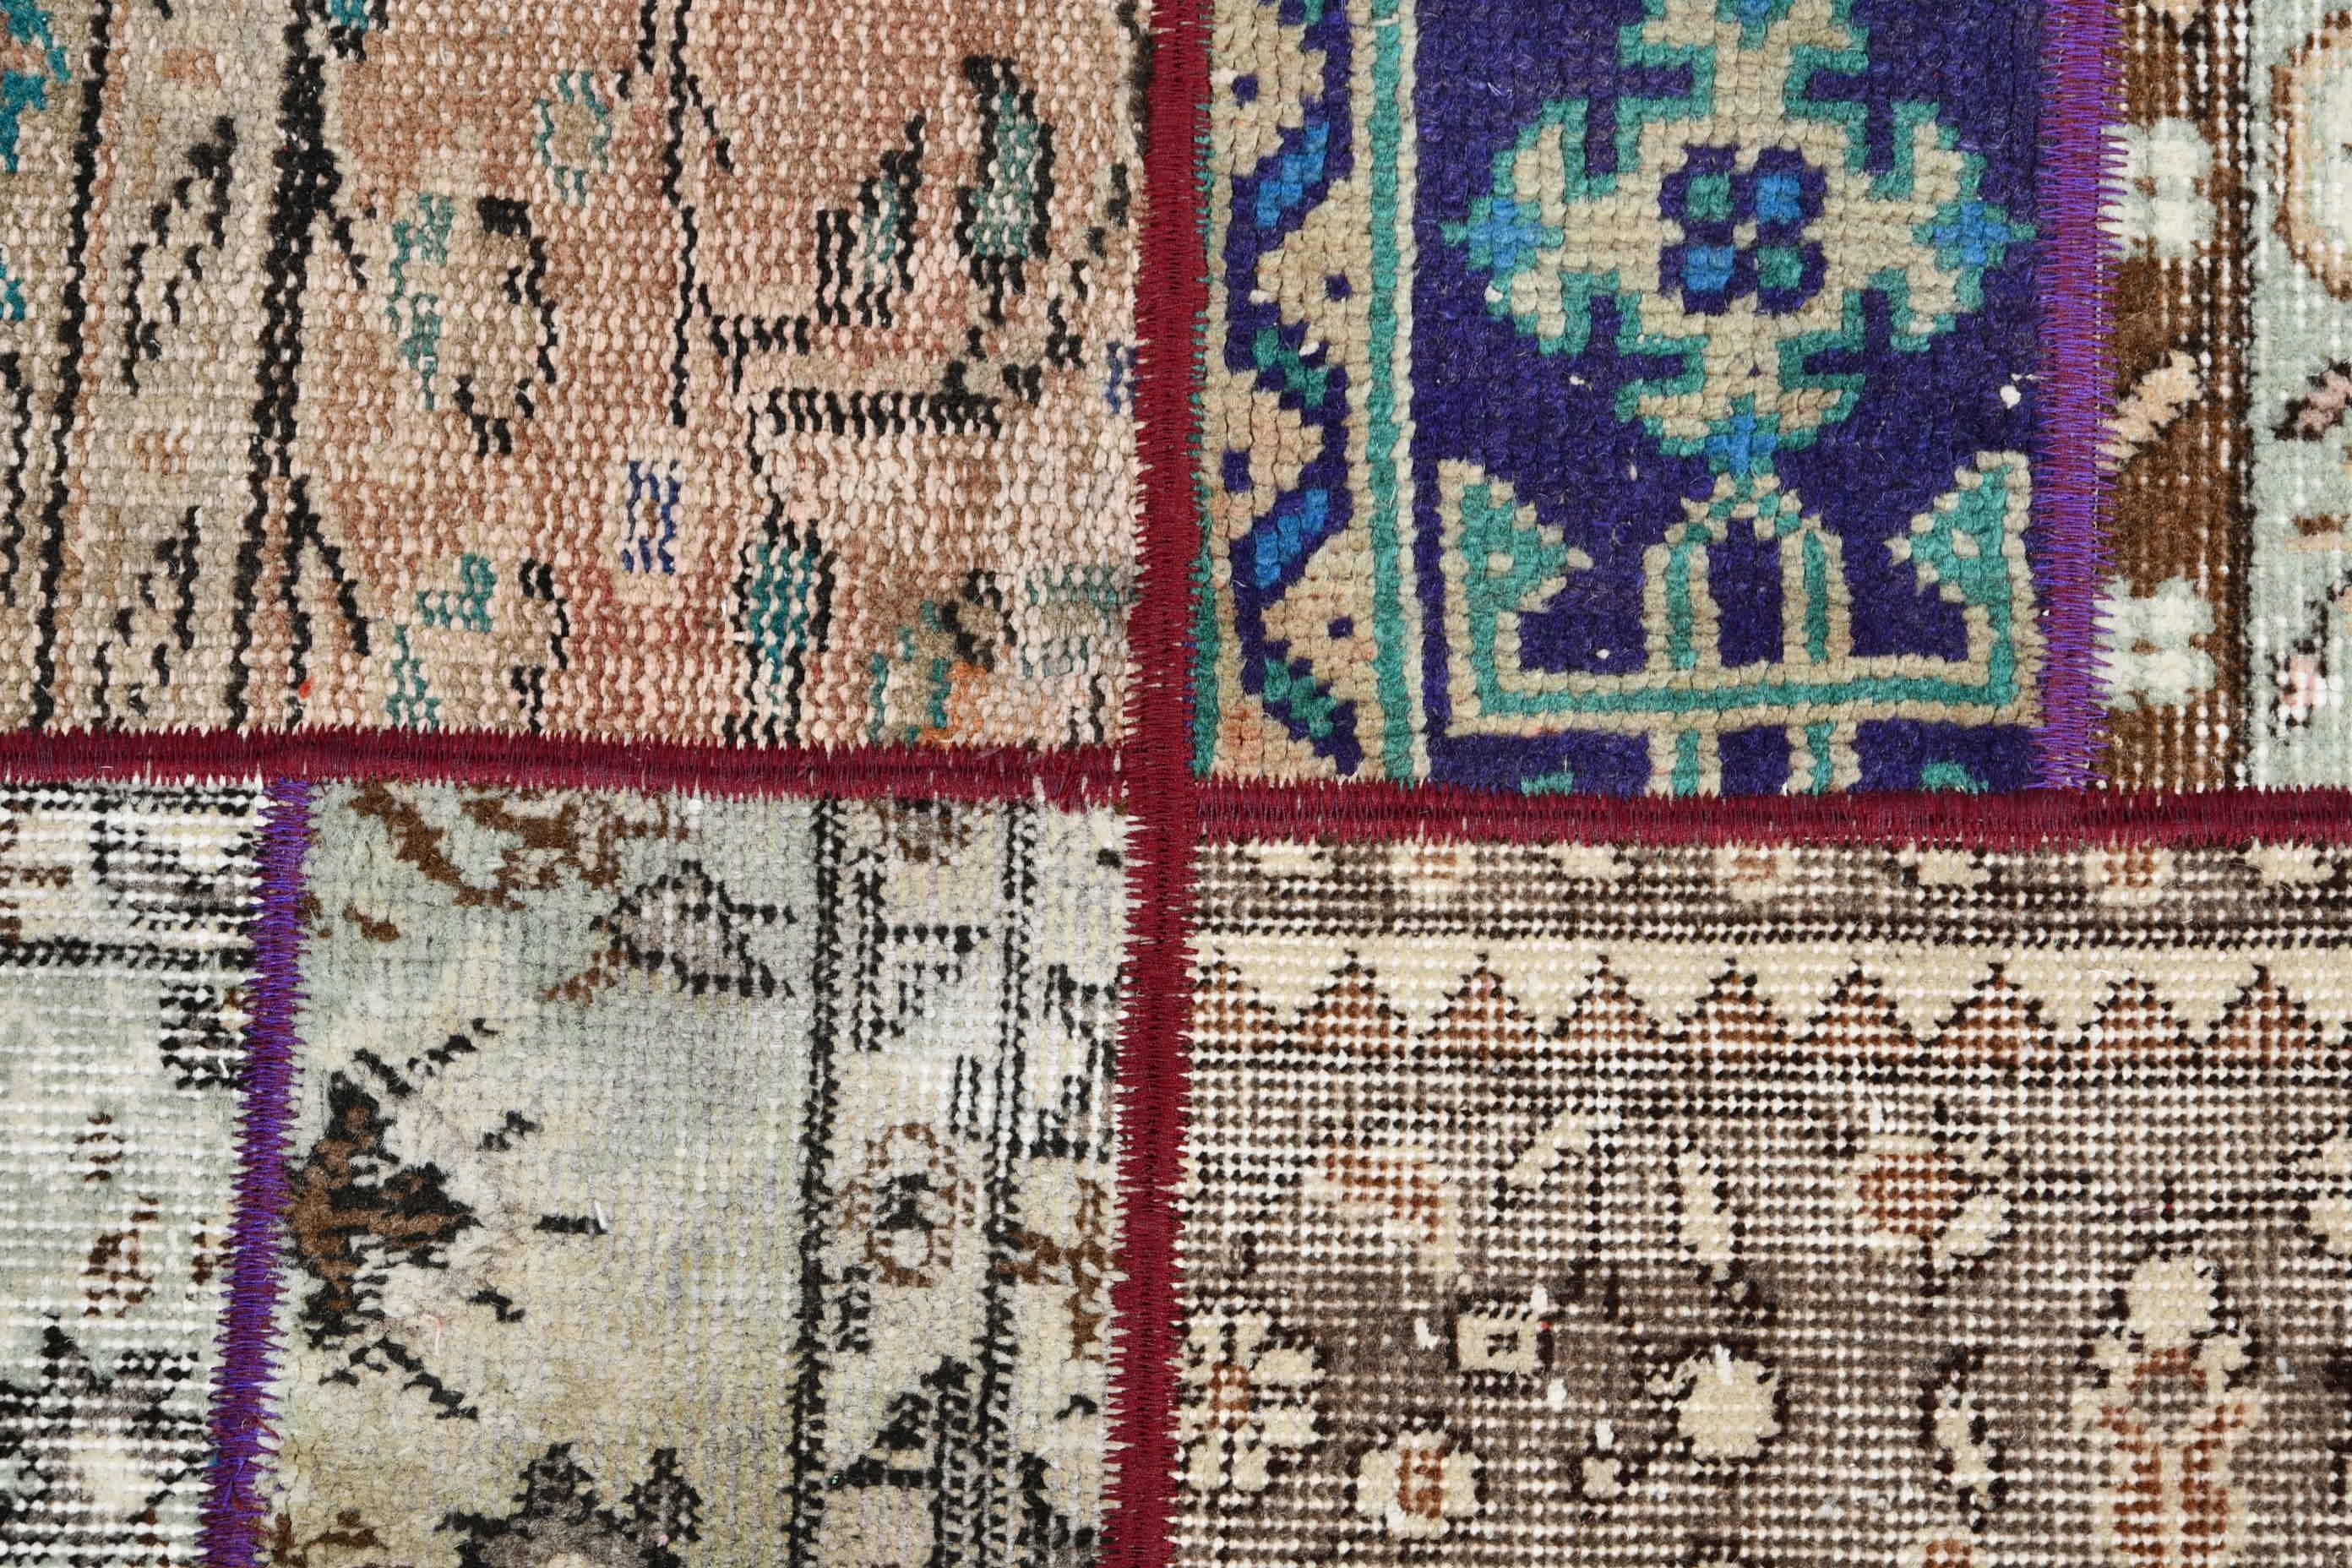 Turkish Rugs, Moroccan Rugs, Vintage Rugs, Entry Rug, Bath Rug, Antique Rug, Rugs for Bedroom, Brown Floor Rug, 1.5x3.8 ft Small Rug